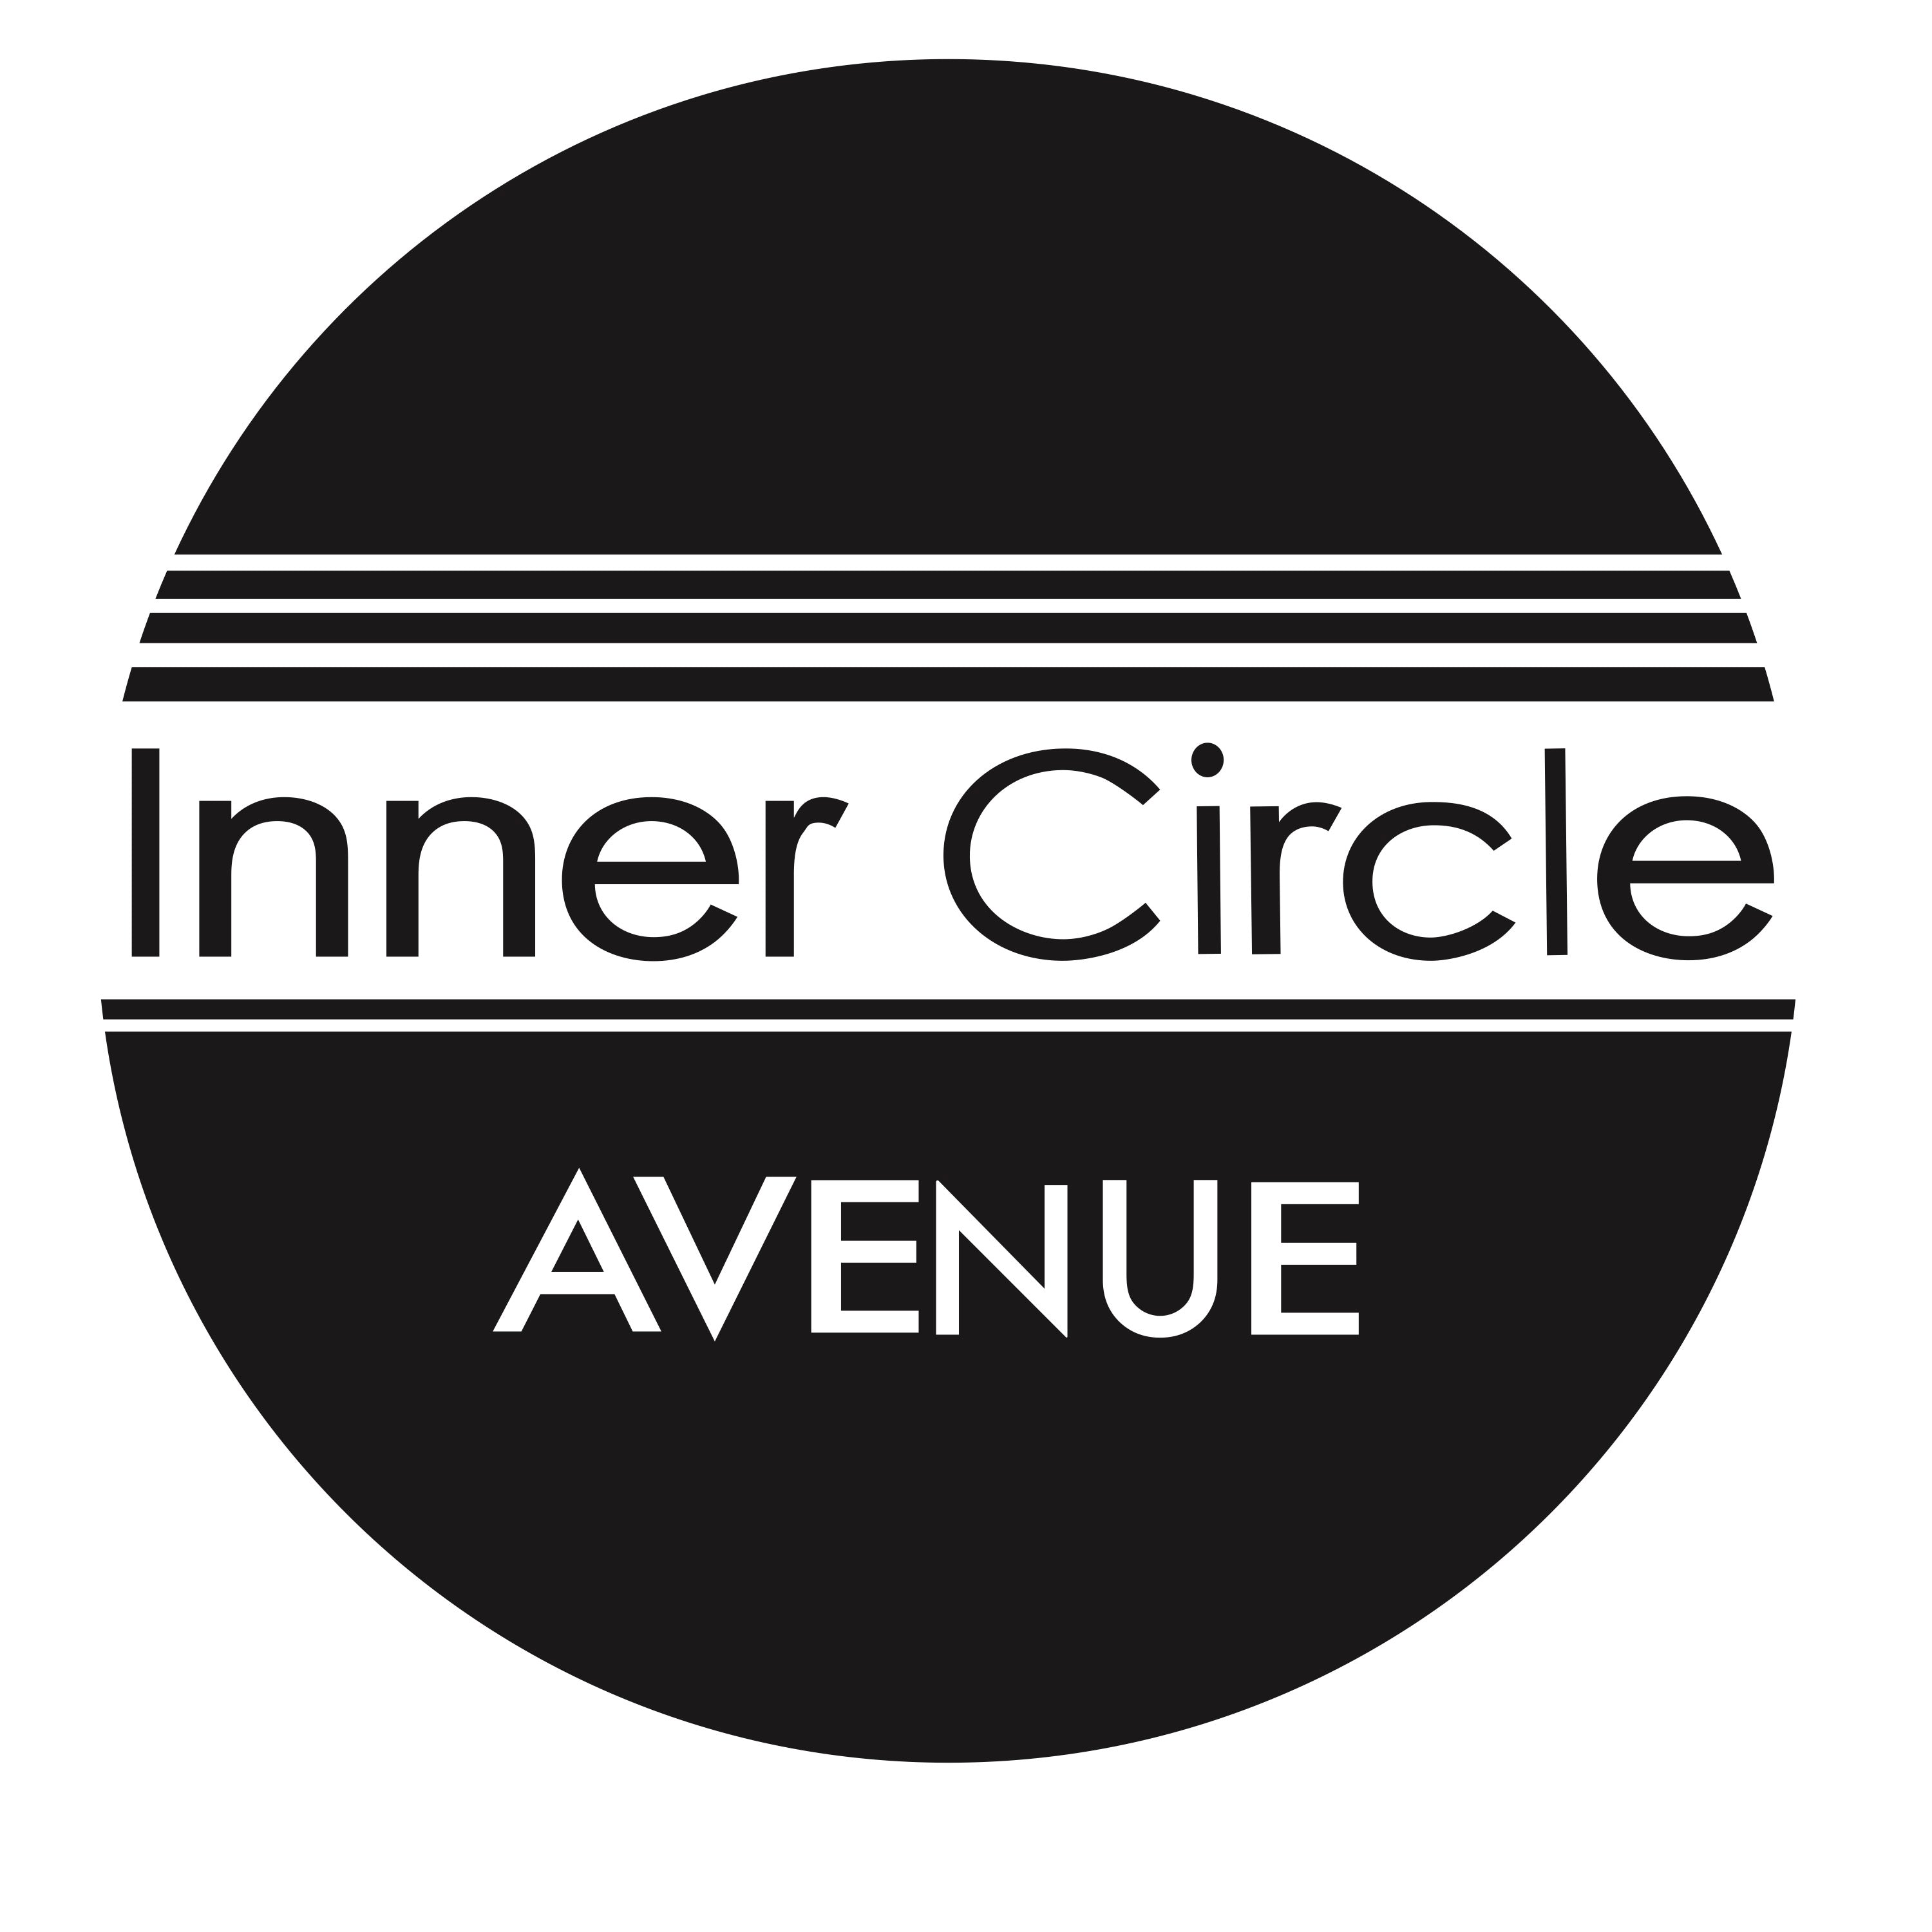 Inner Circle Avenue Store